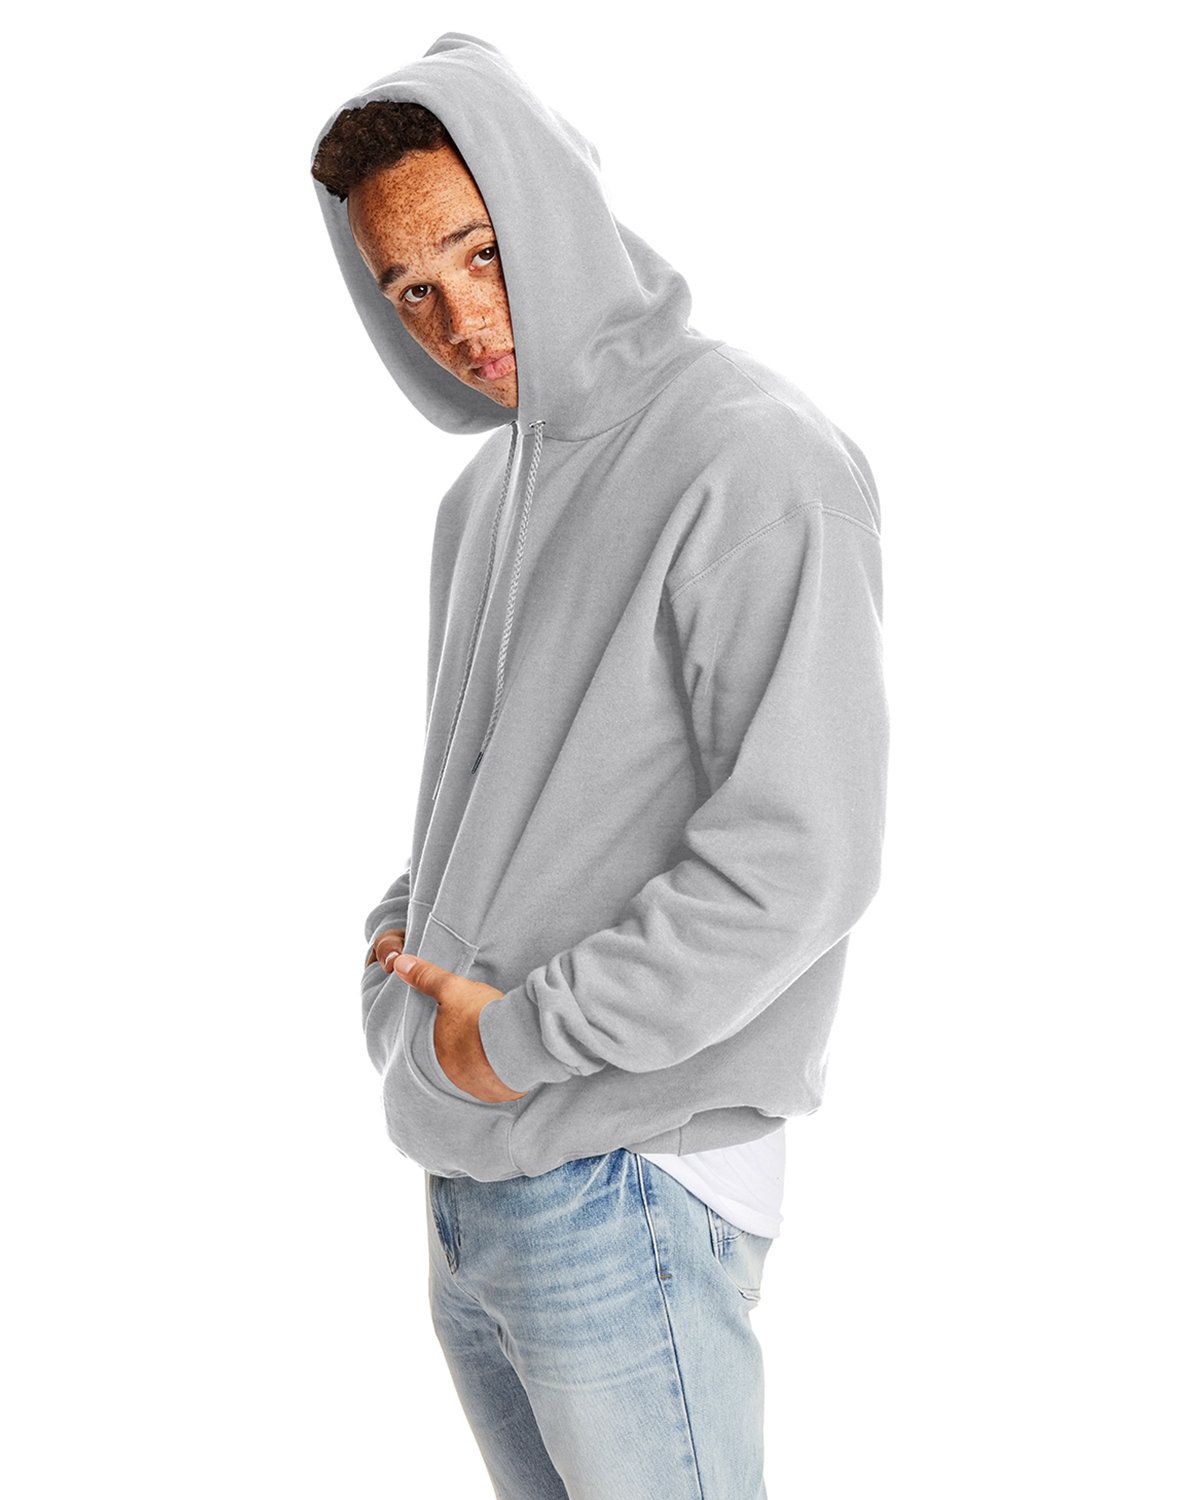 'Hanes F170 Adult 9.7 oz. Ultimate Cotton 90/10 Pullover Hooded Sweatshirt'